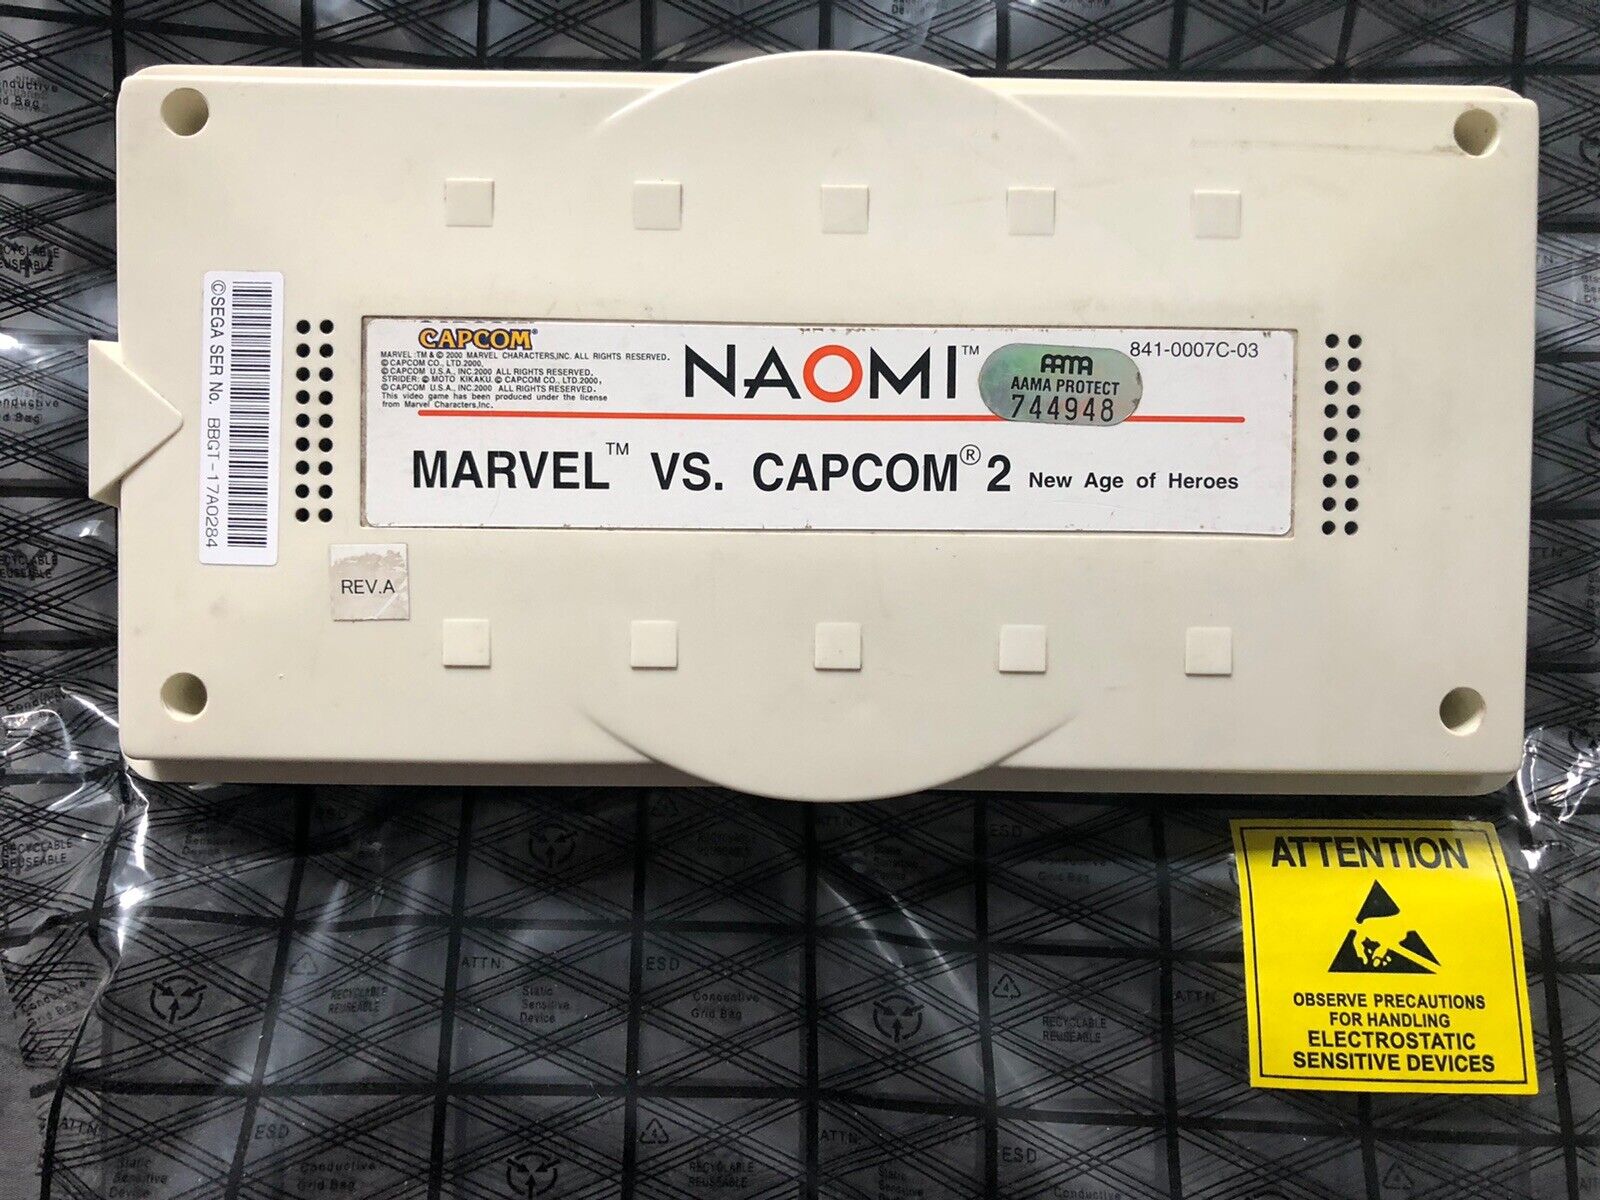 Marvel Vs Capcom 2 Sega Naomi Arcade Board Fully Functional Authentic USA Region